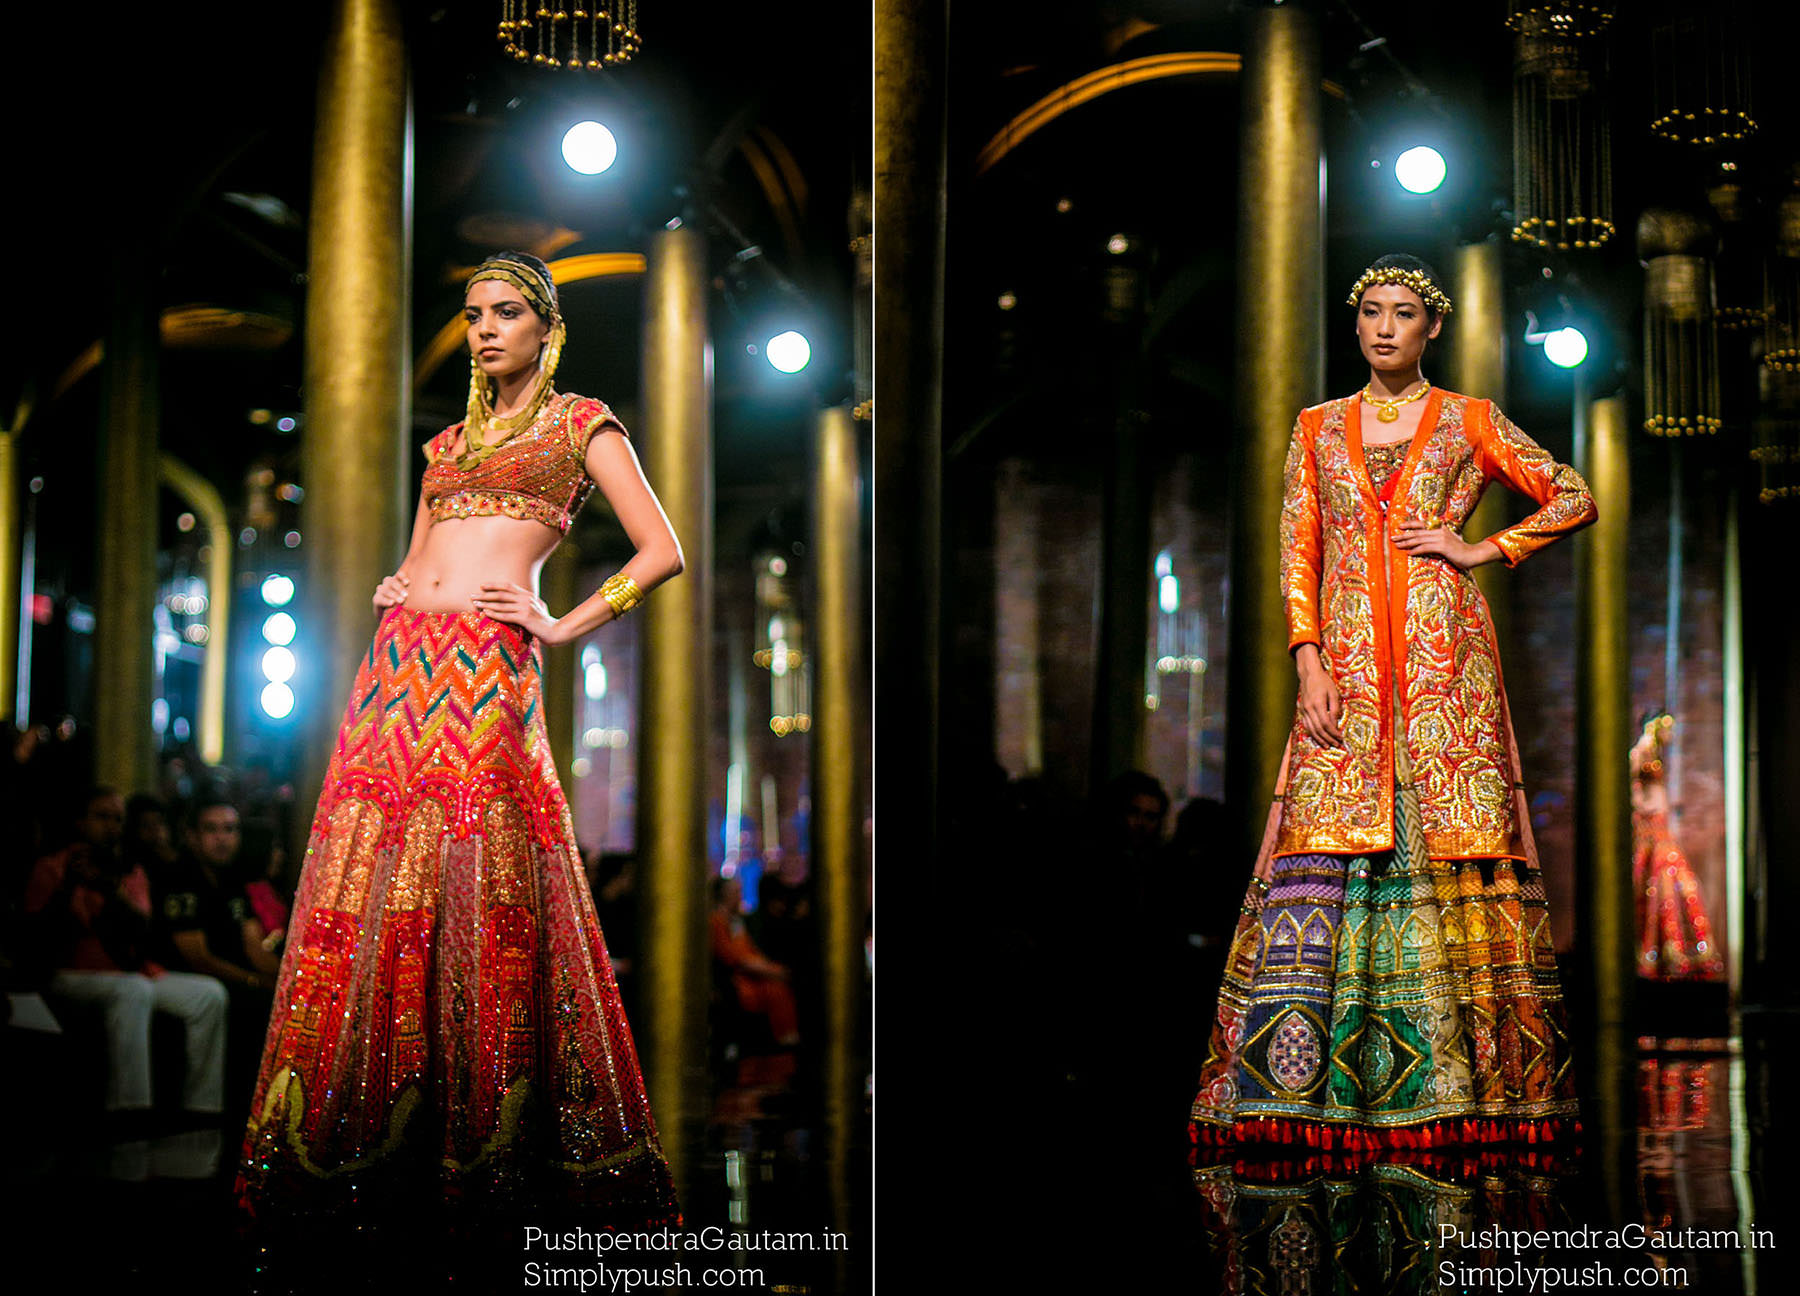 JJ-valaya-bmw-india-bridal-fashion-week-pushpendragautam-pics-event-photographer-india